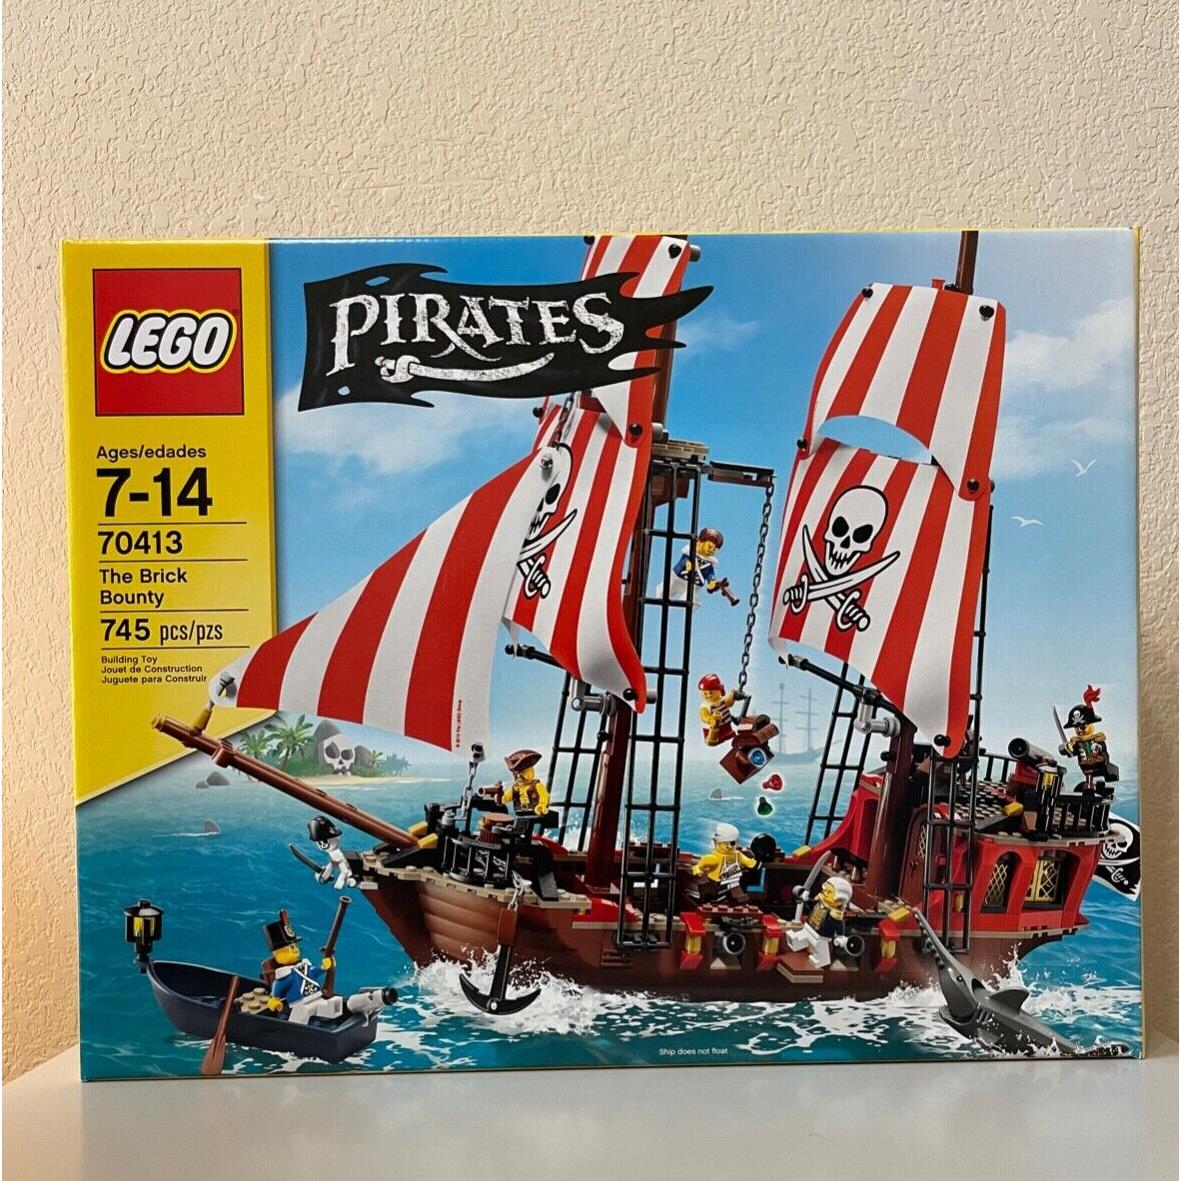 Lego 70413 Pirates The Brick Bounty - Retired